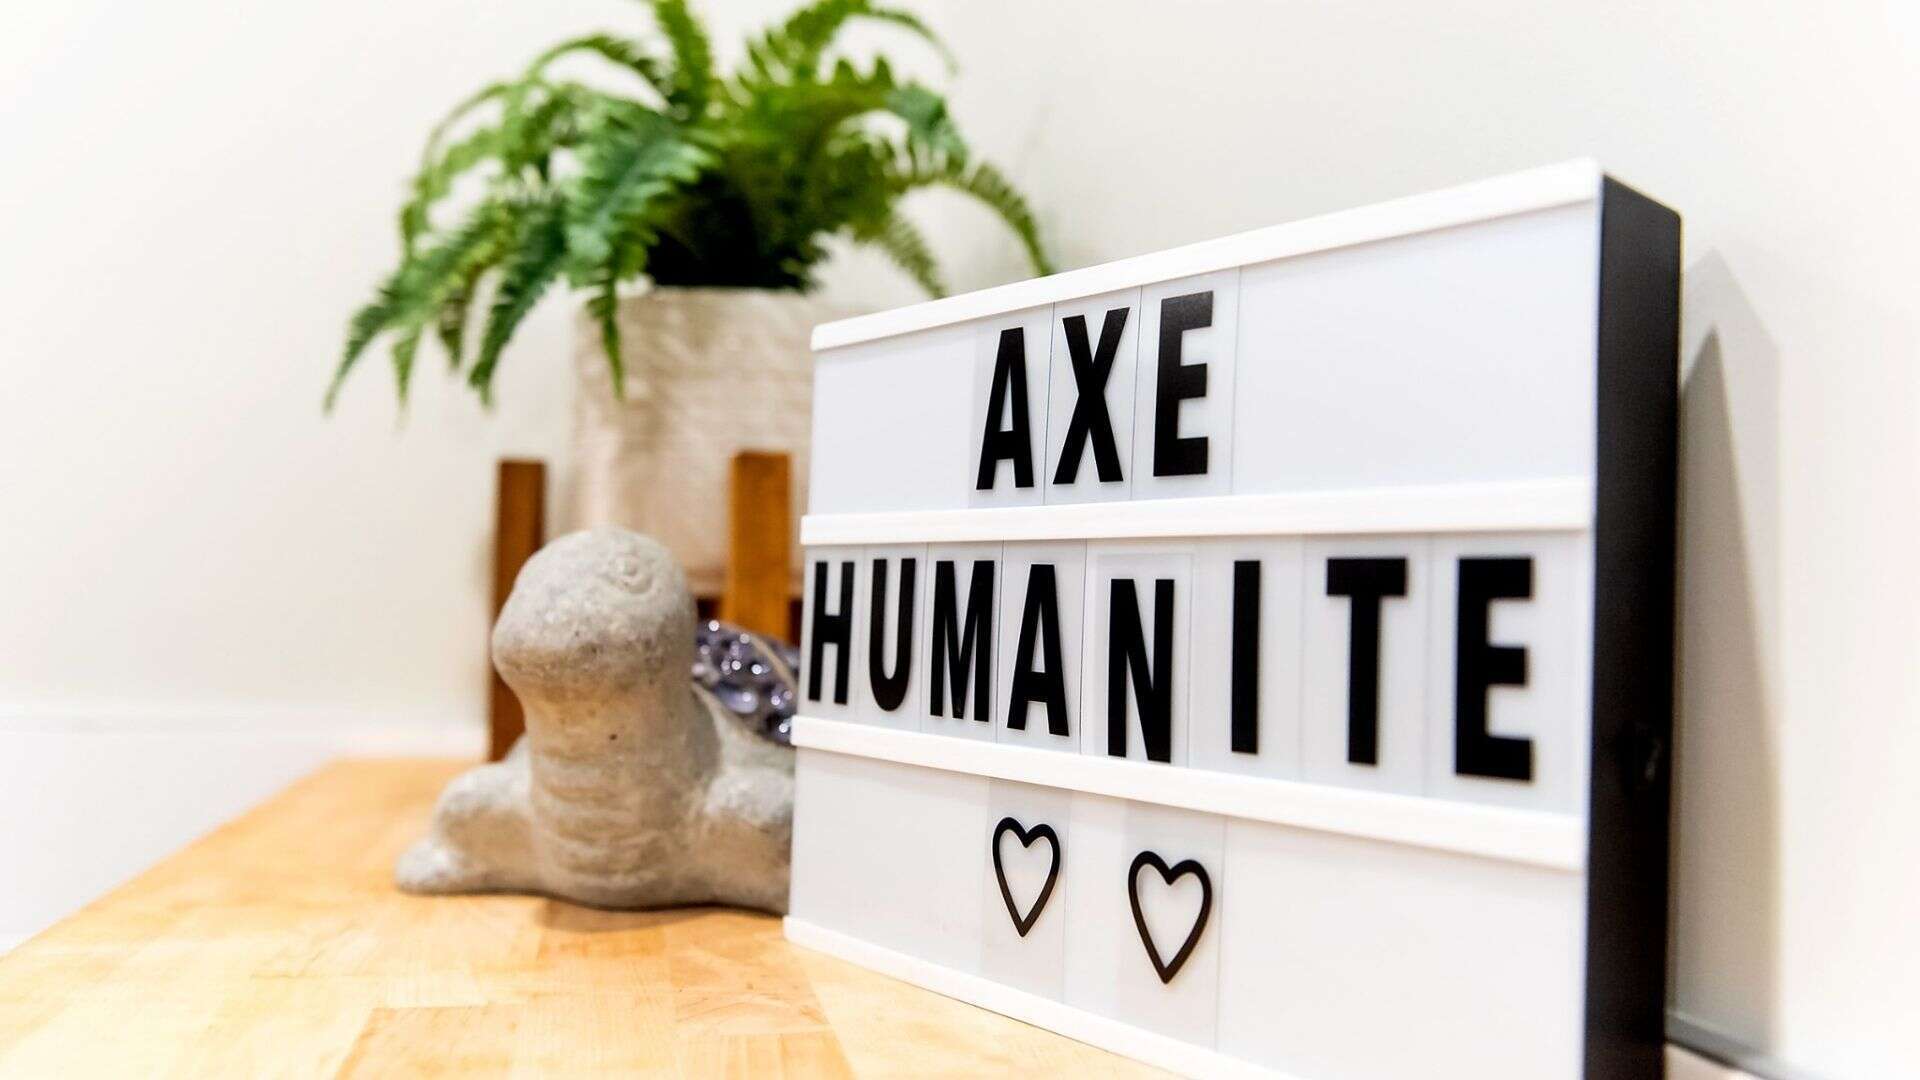 axe-humanite-2282.jpg